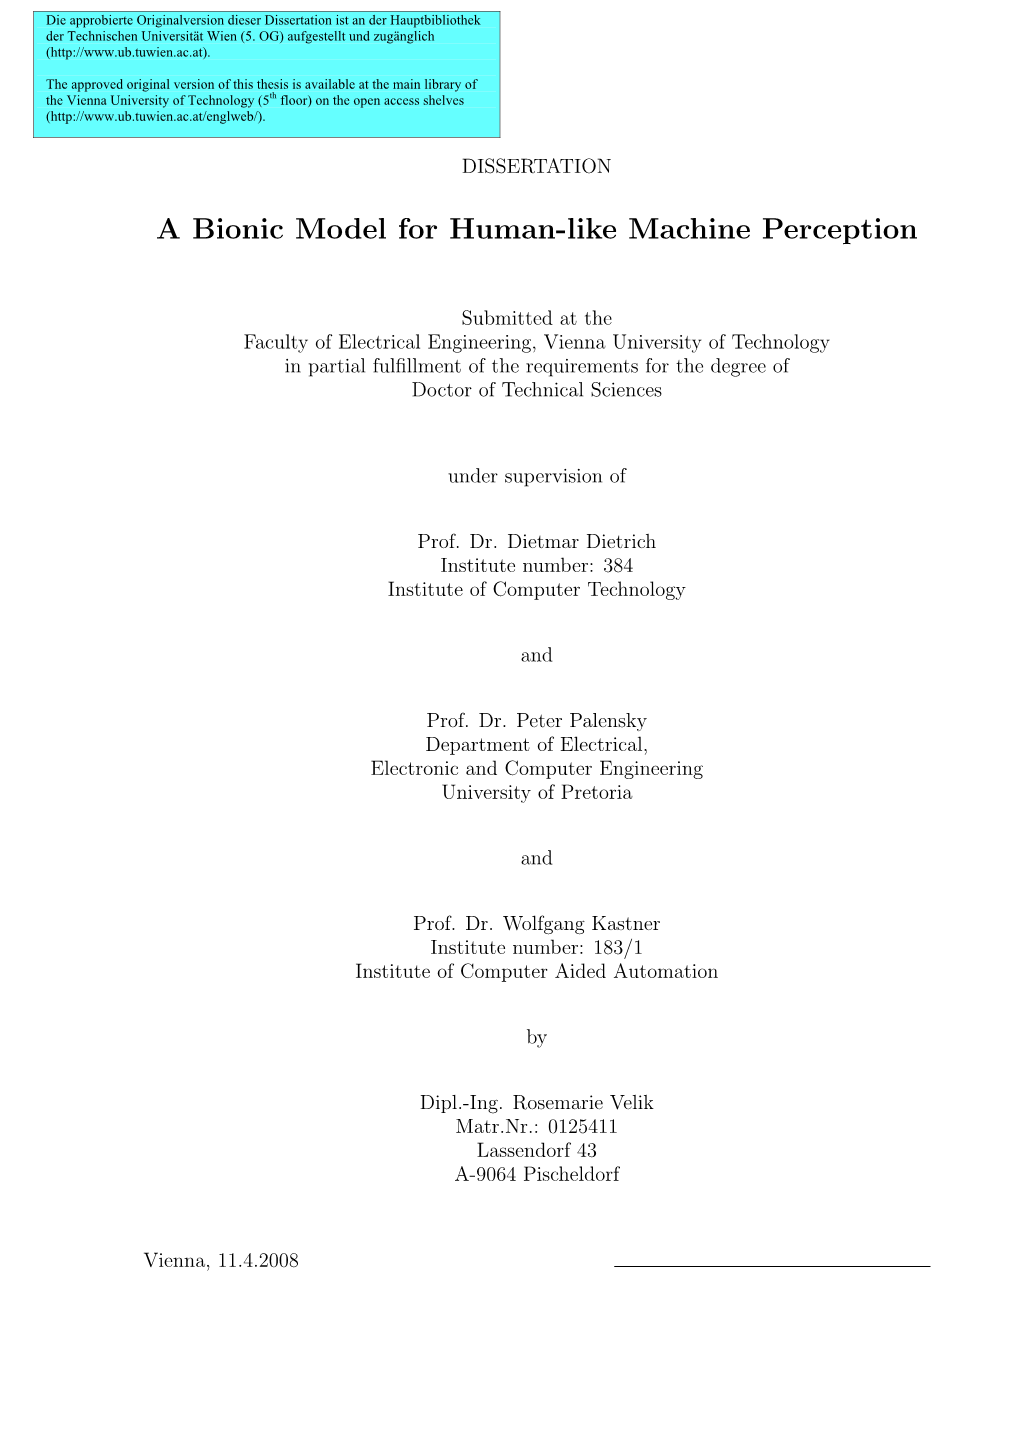 (Pdf), 2008: a Bionic Model Fur Human-Like Machine Perception